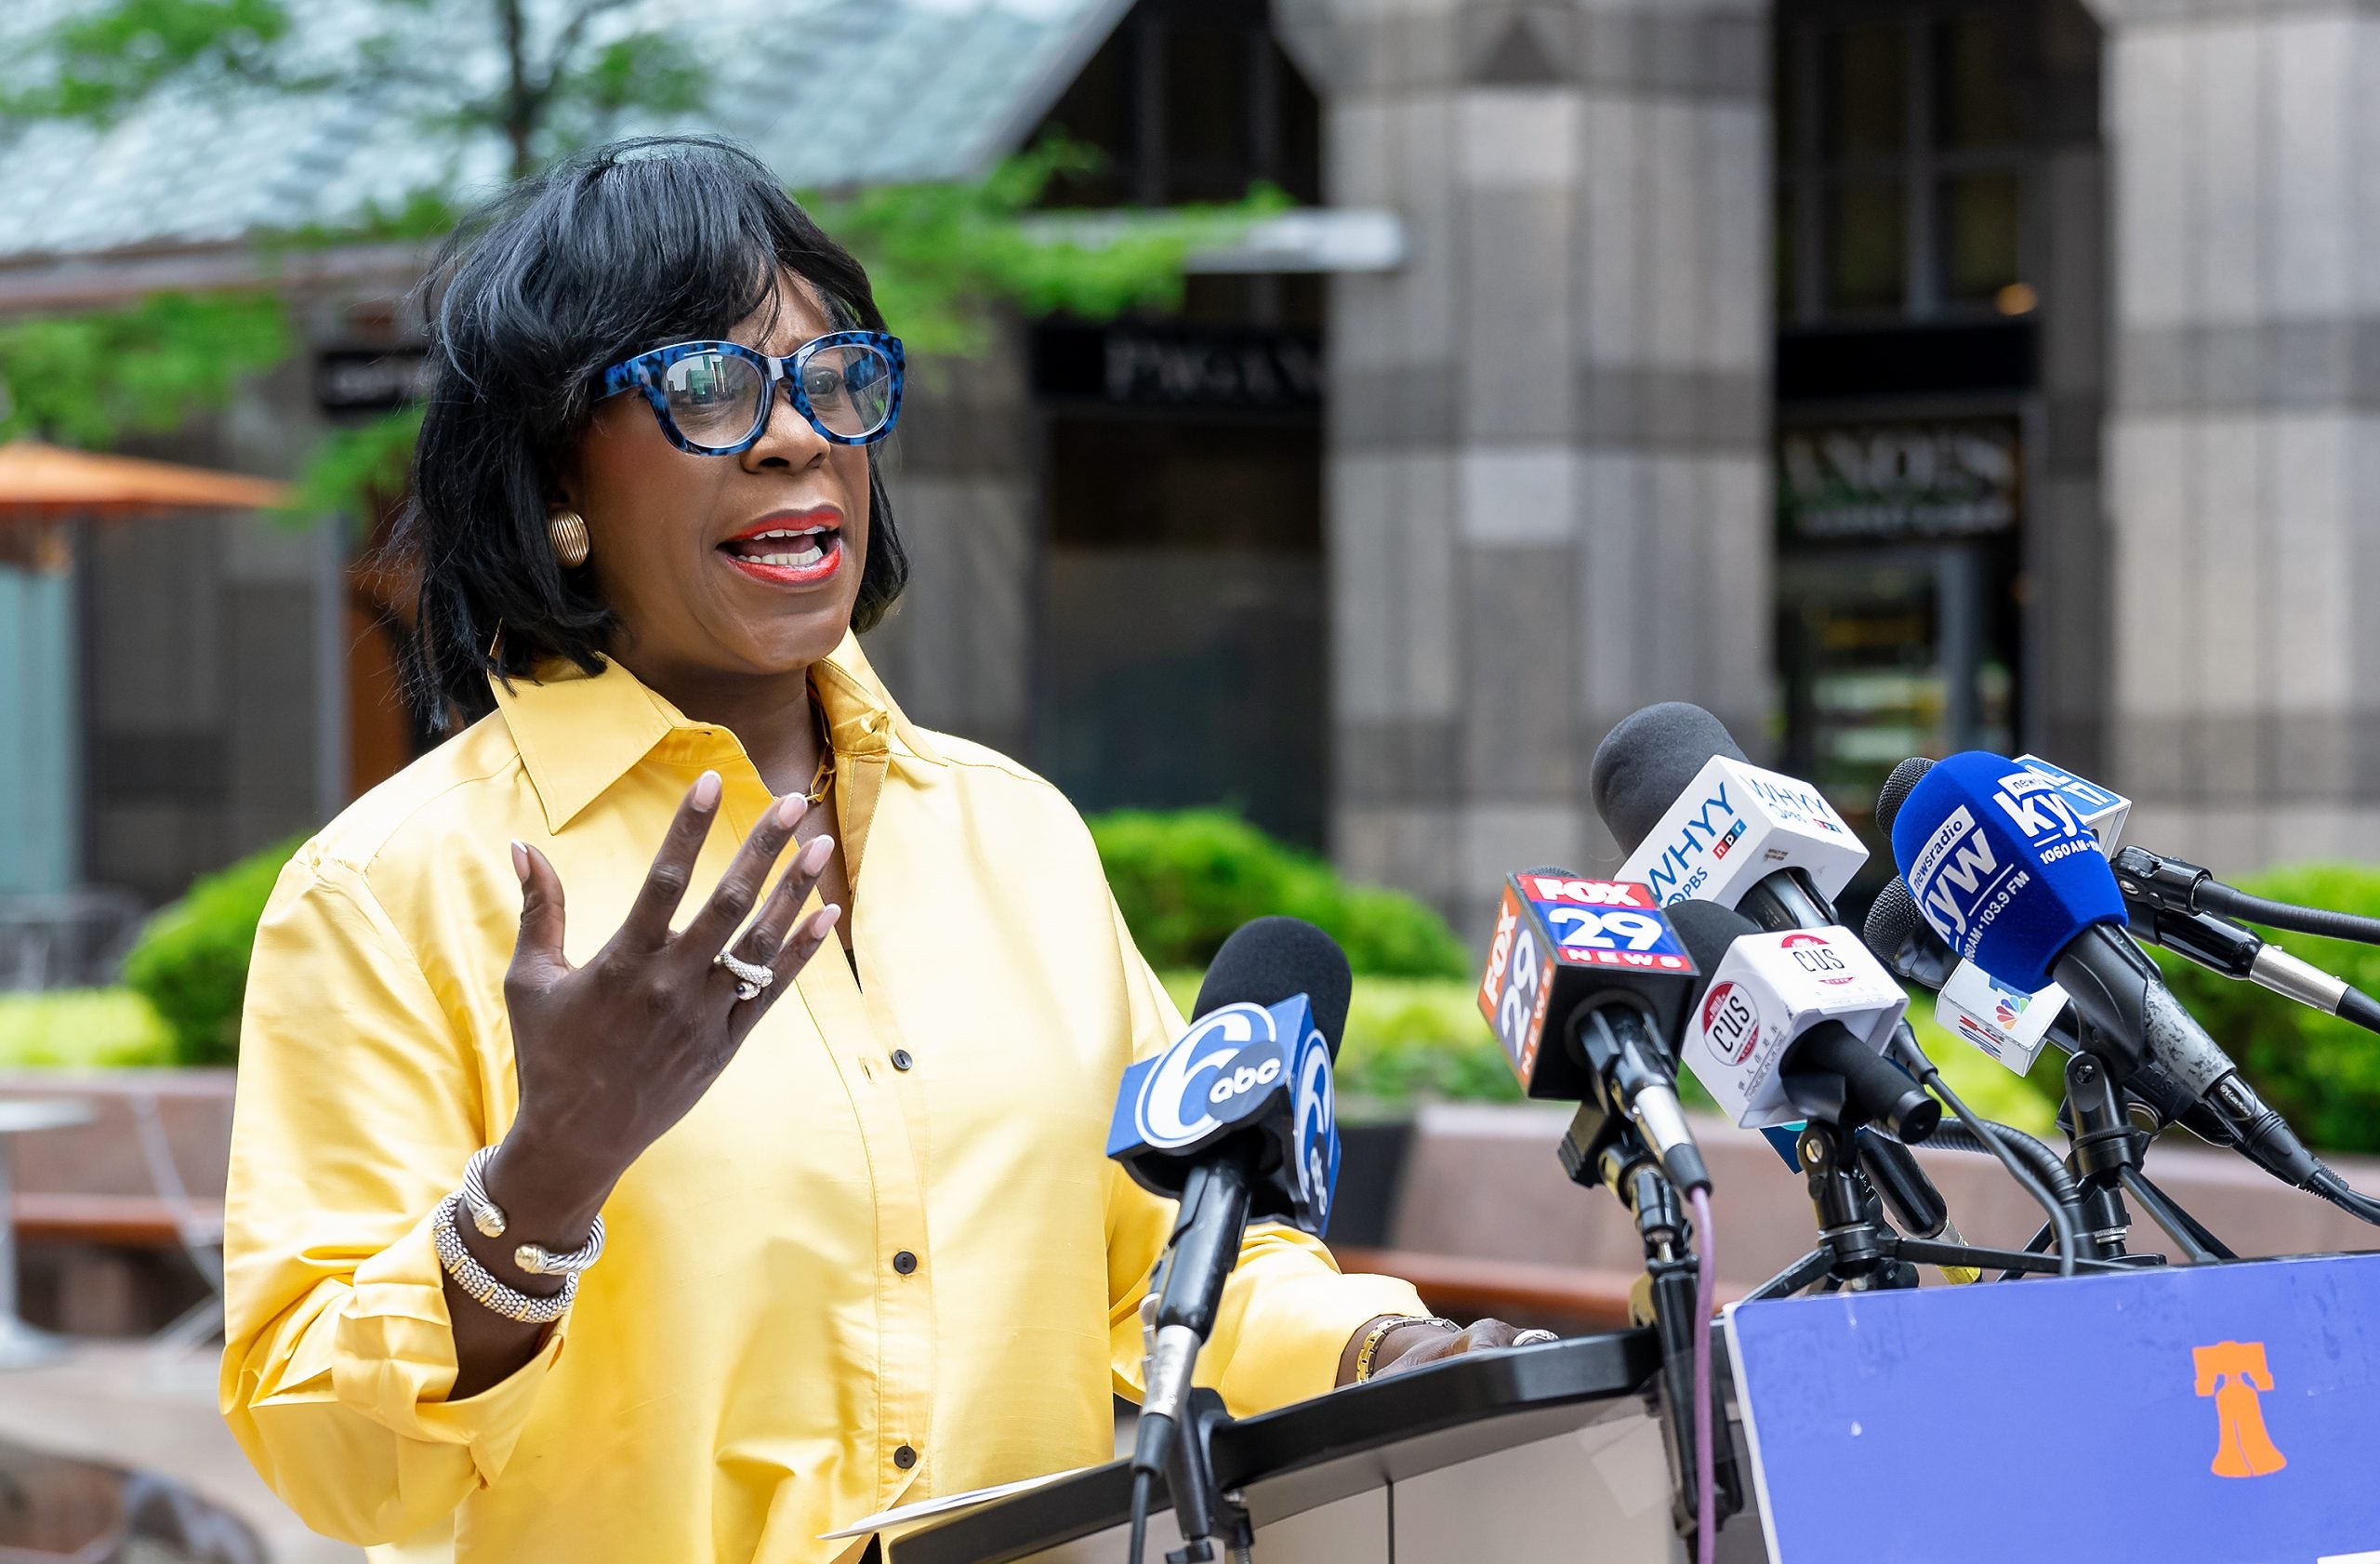 Philadelphia's Mayor Calls Arrests Of Black LGBTQ Leaders "Very Concerning"